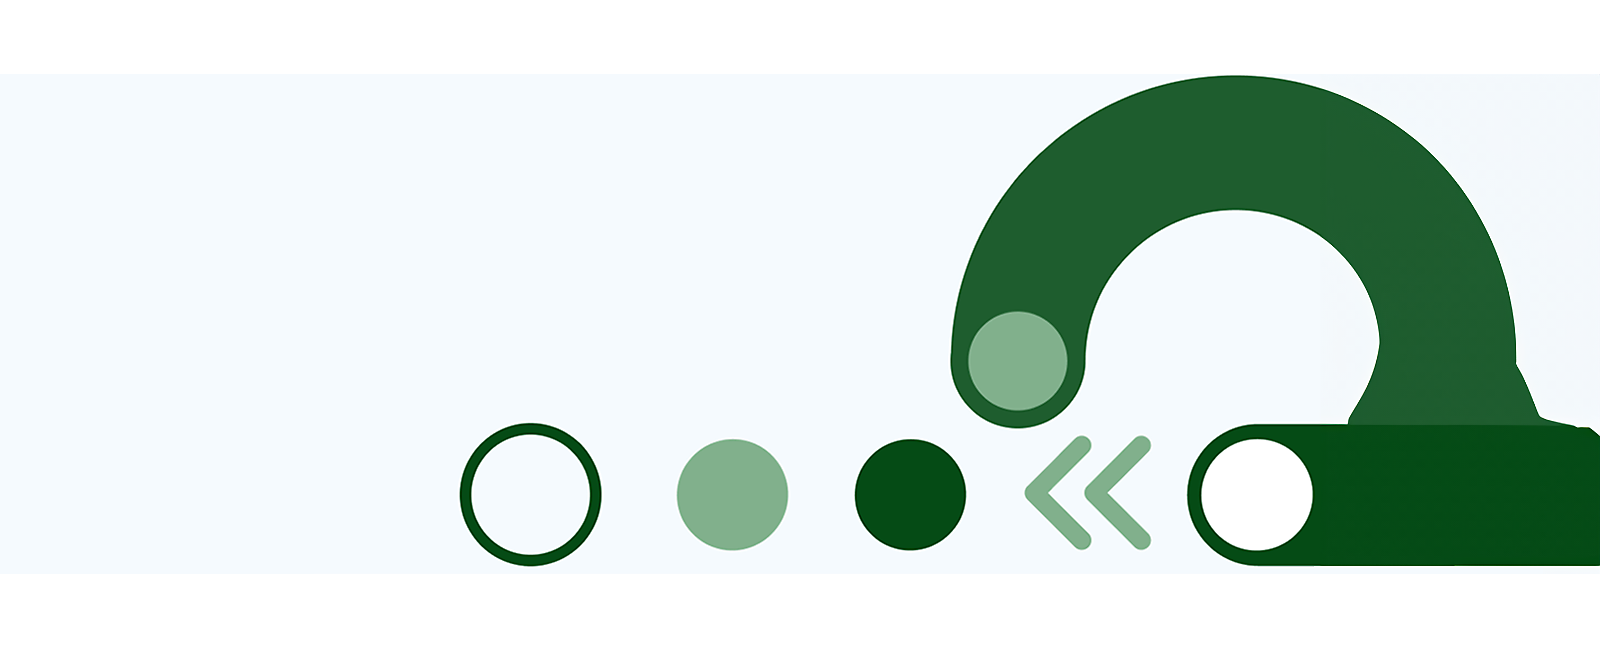 Bentuk dan garis hijau abstrak pada latar belakang putih.